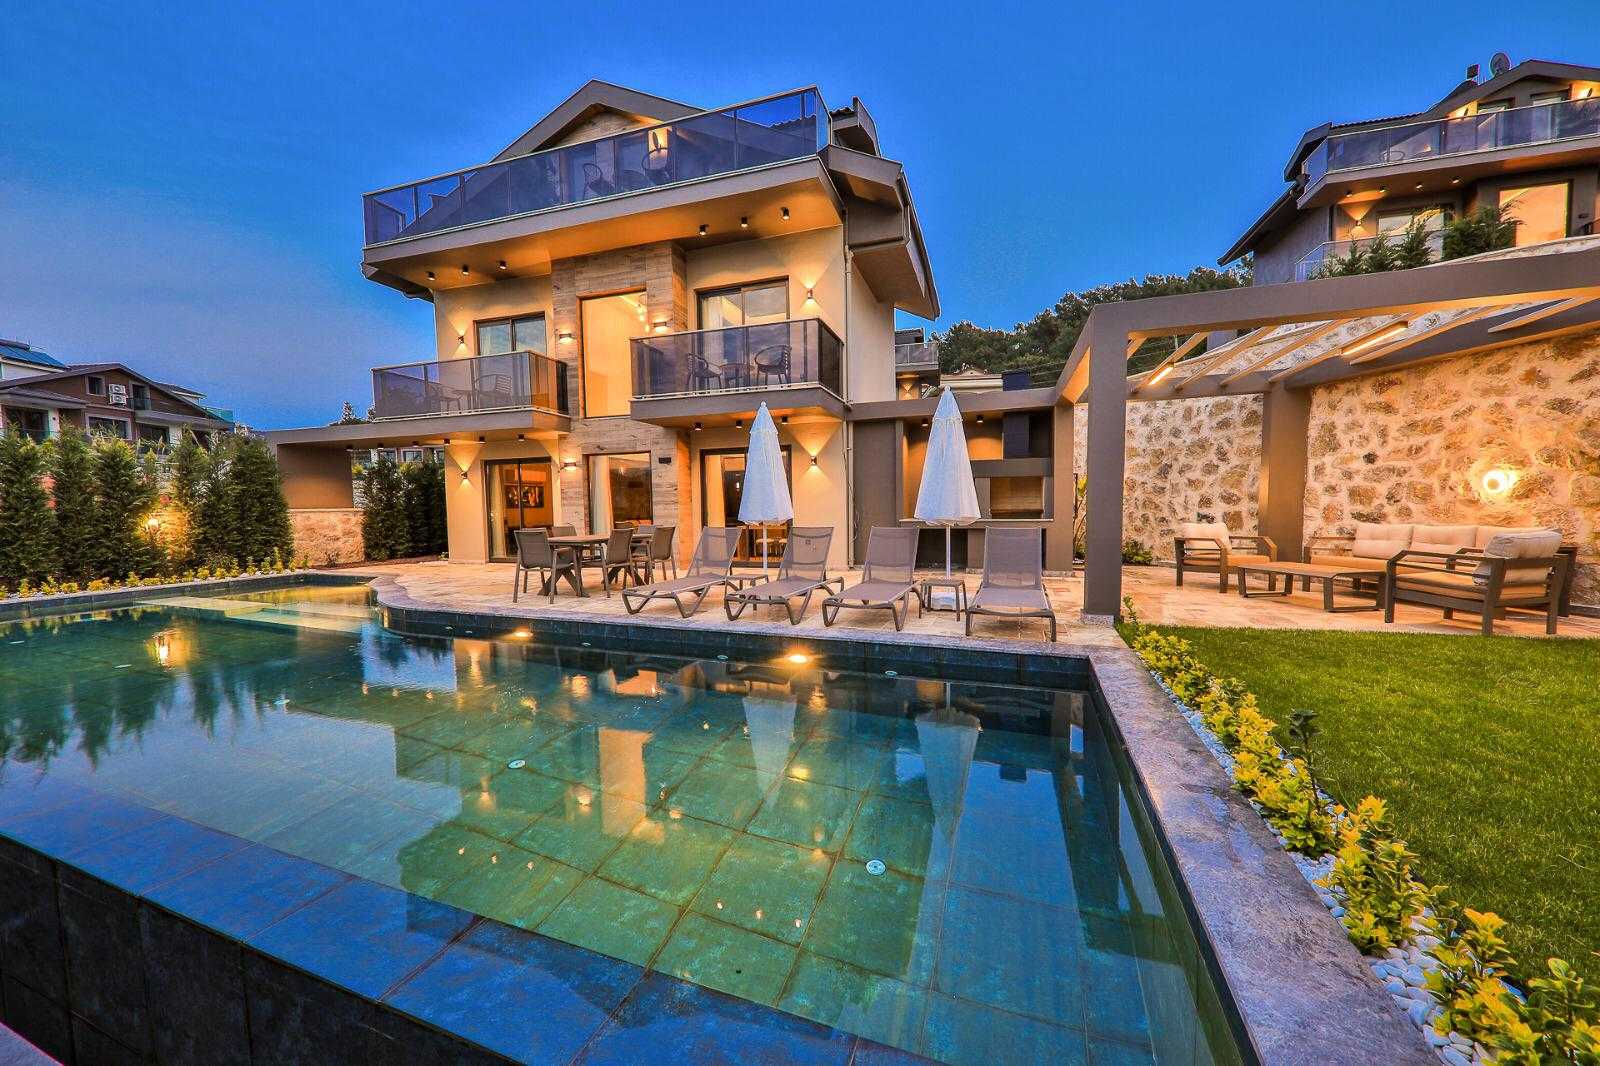 Luxury Calis Spa Villas - Fethiye - Detched villas